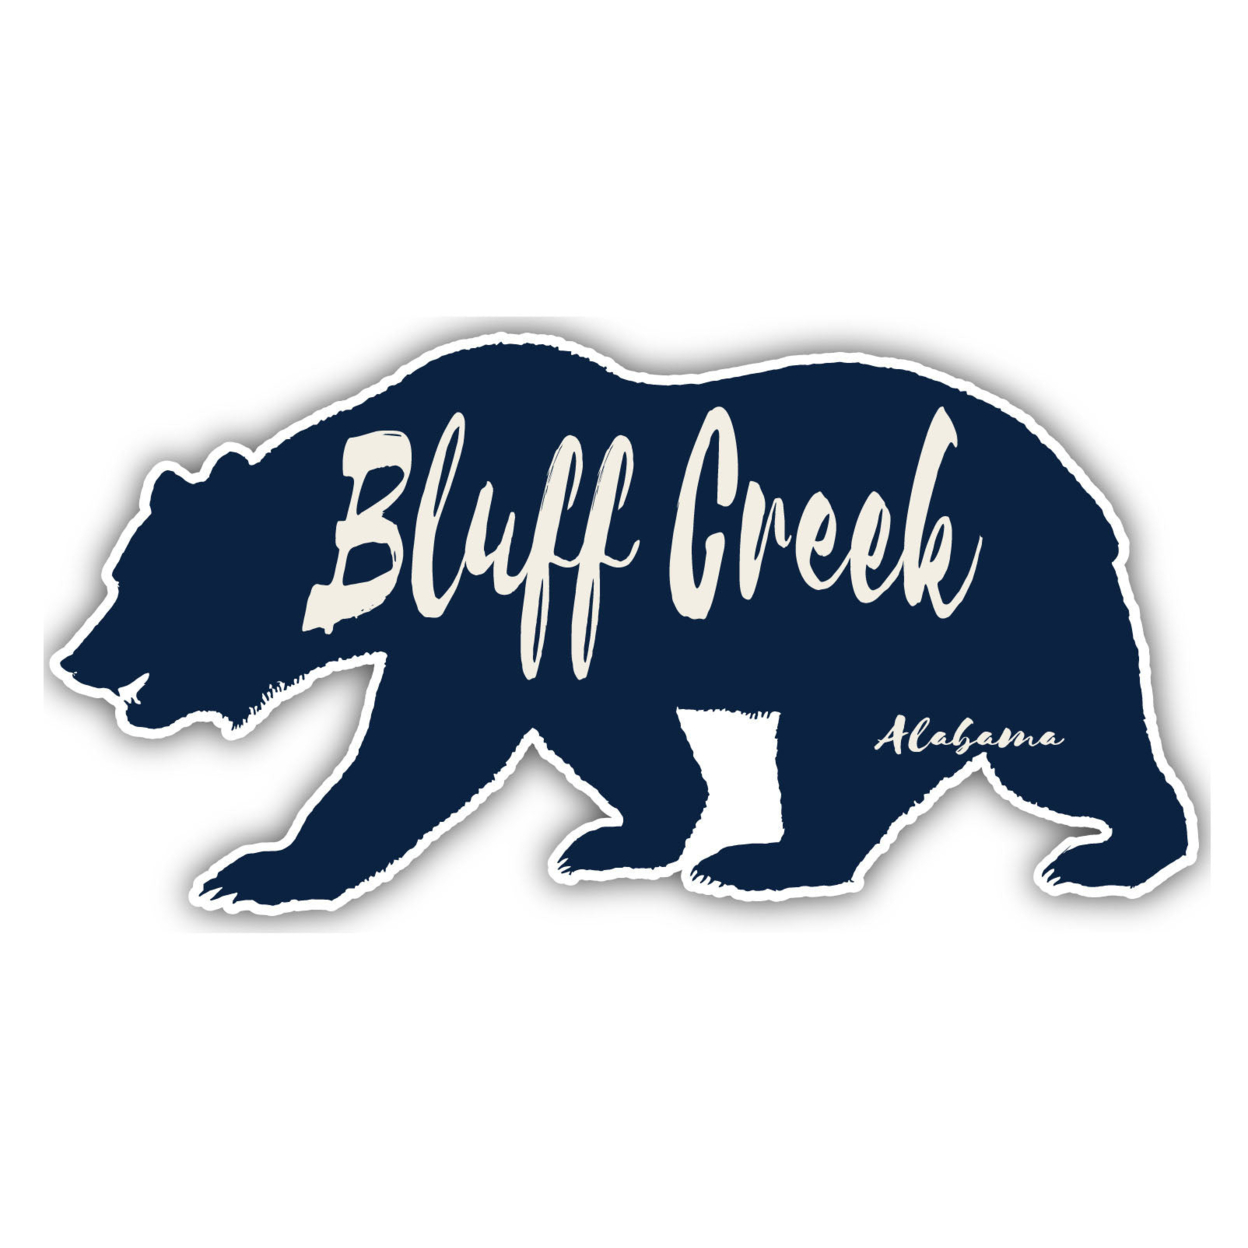 Bluff Creek Alabama Souvenir Decorative Stickers (Choose Theme And Size) - 4-Pack, 4-Inch, Bear